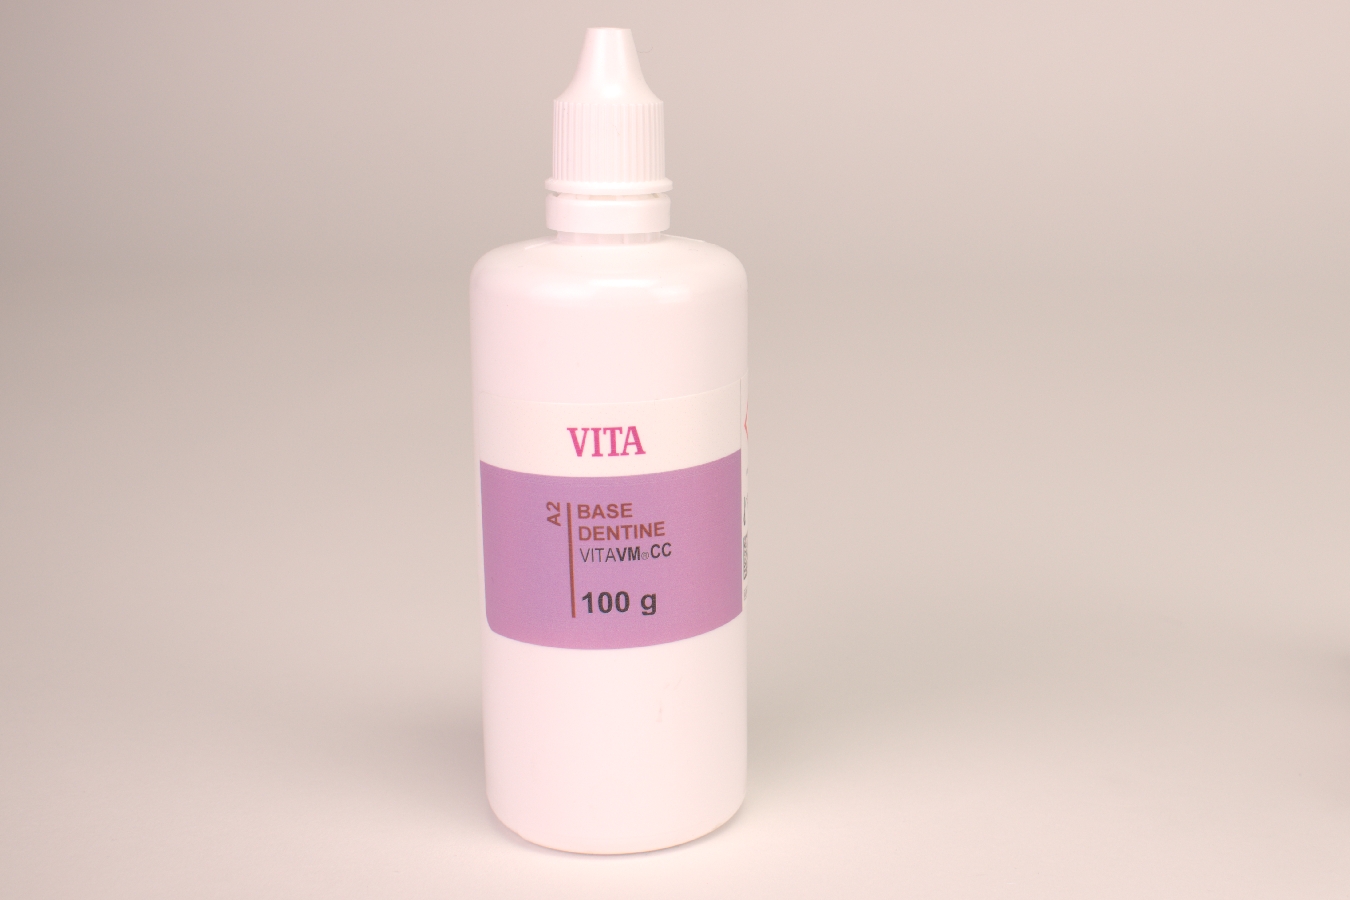 Vita VM CC Base Dentin A2 100g